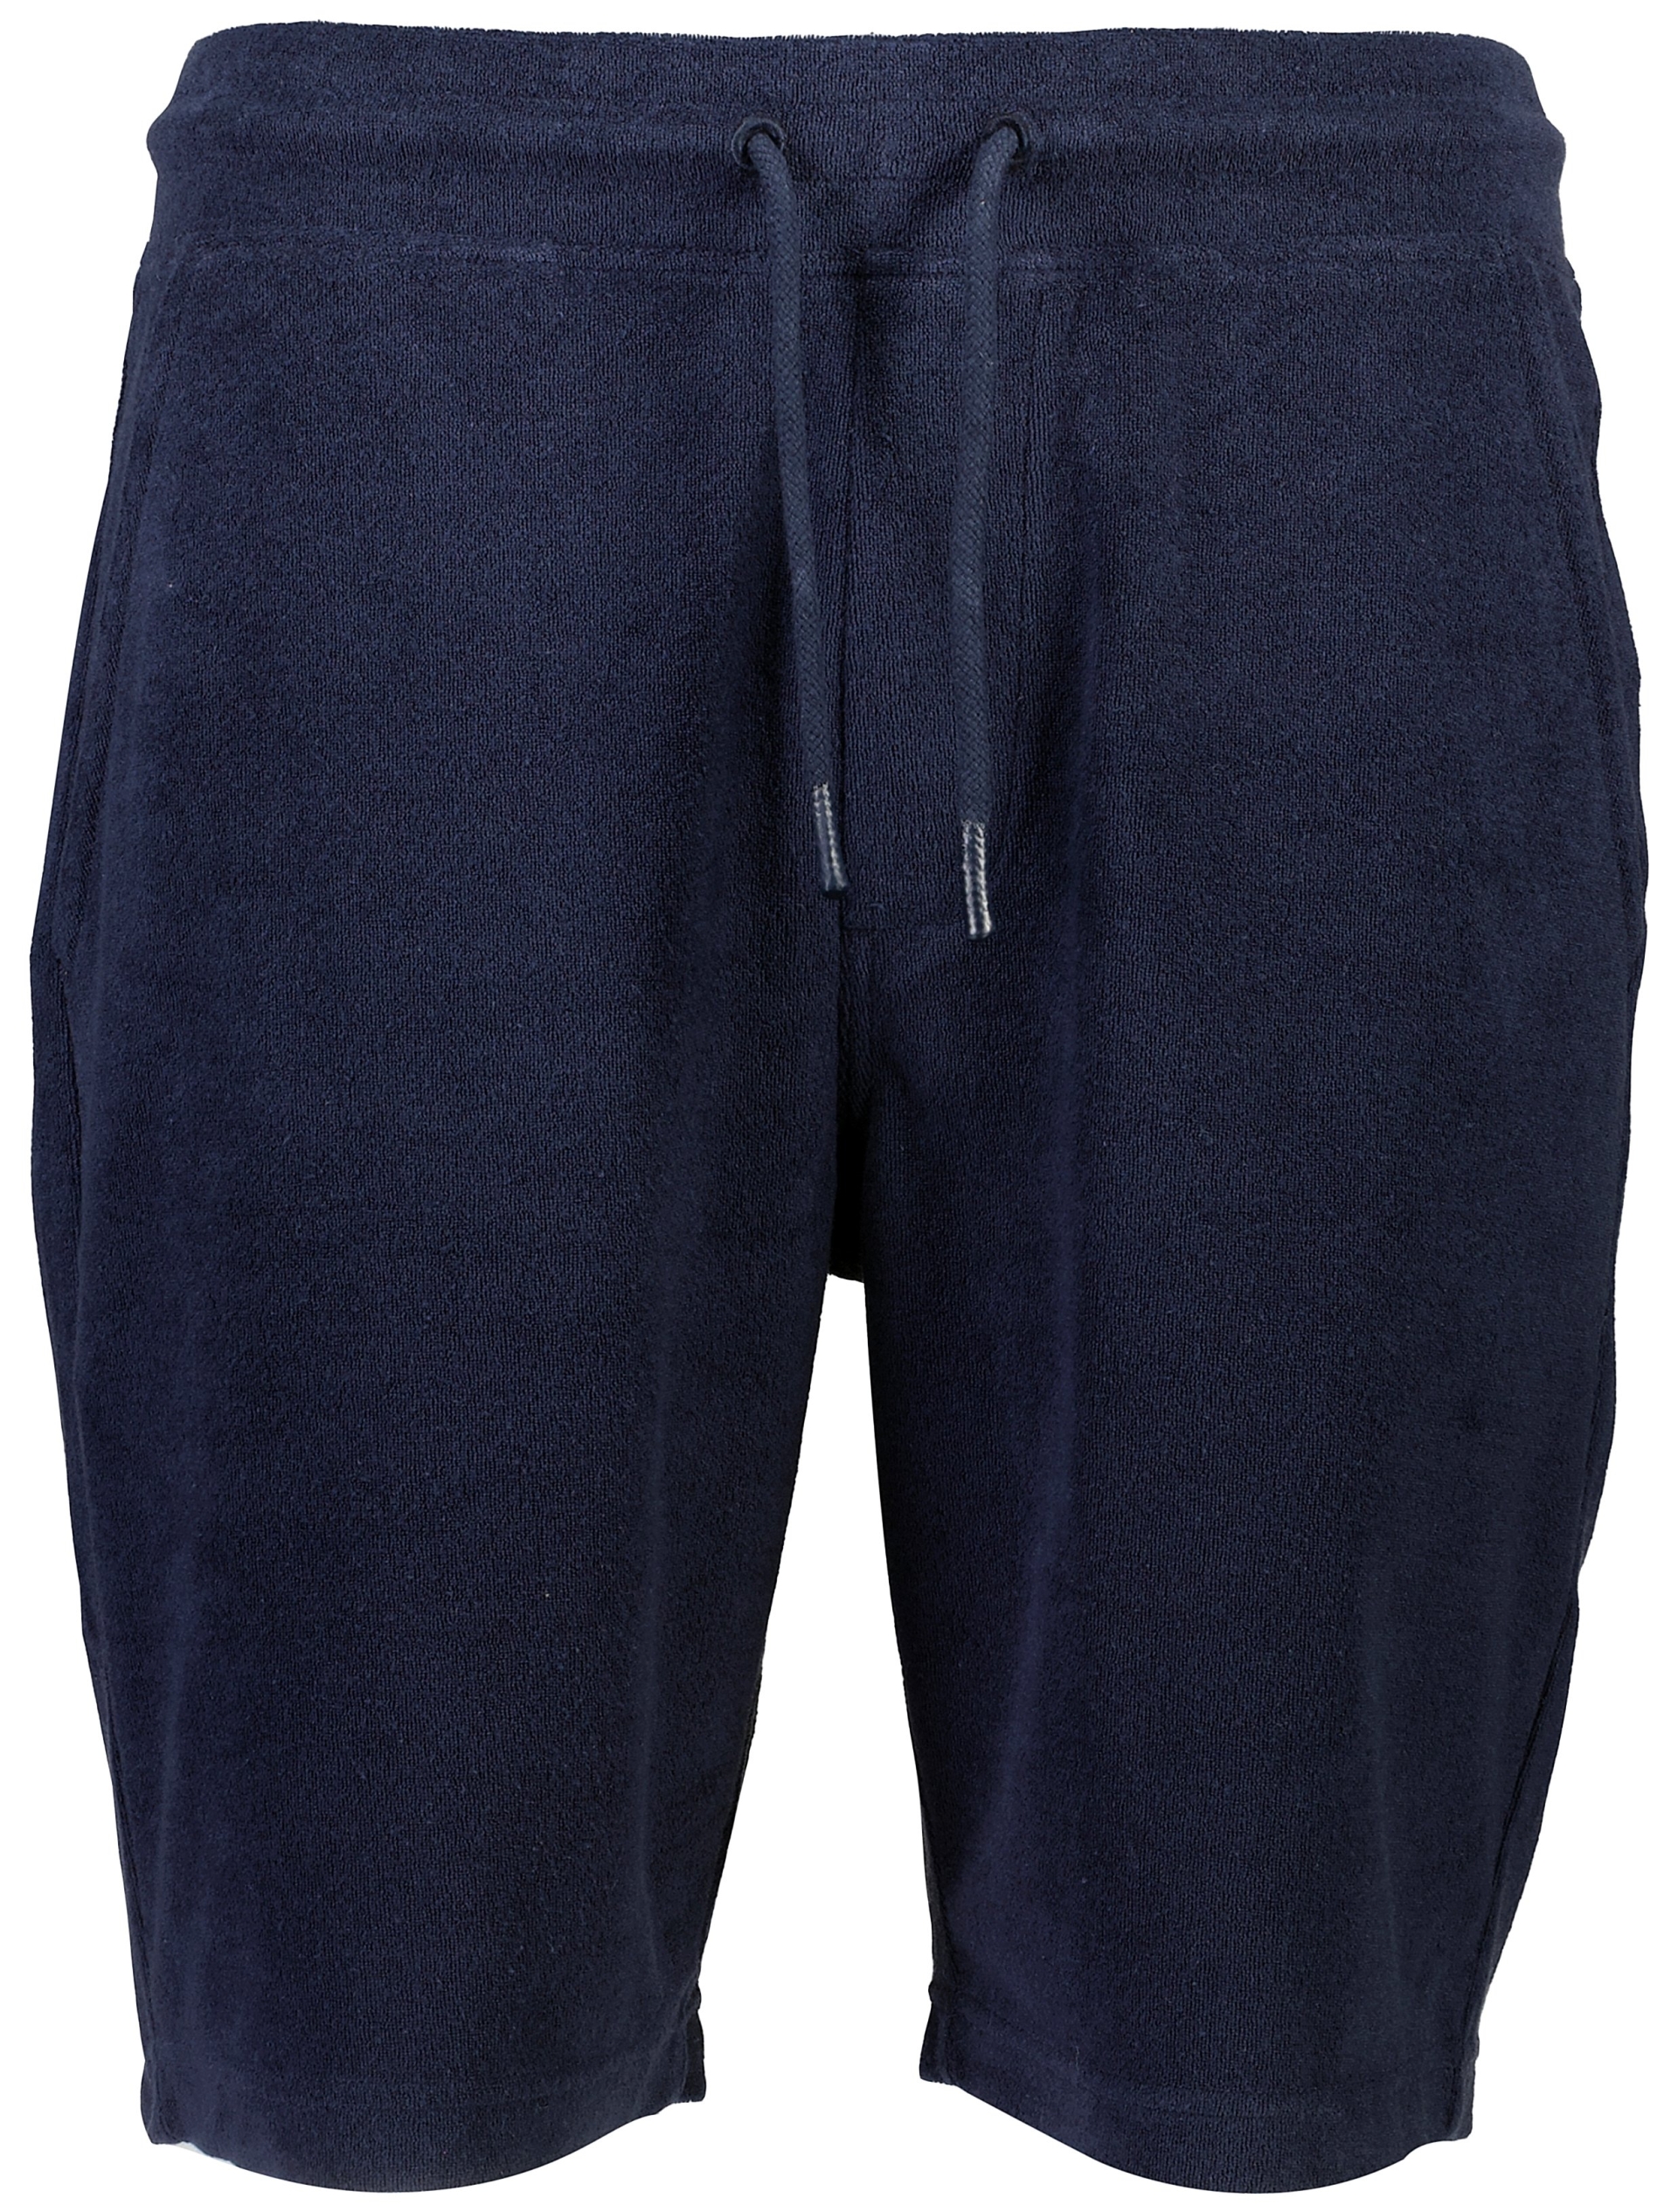 Lindbergh Casual shorts blå / navy